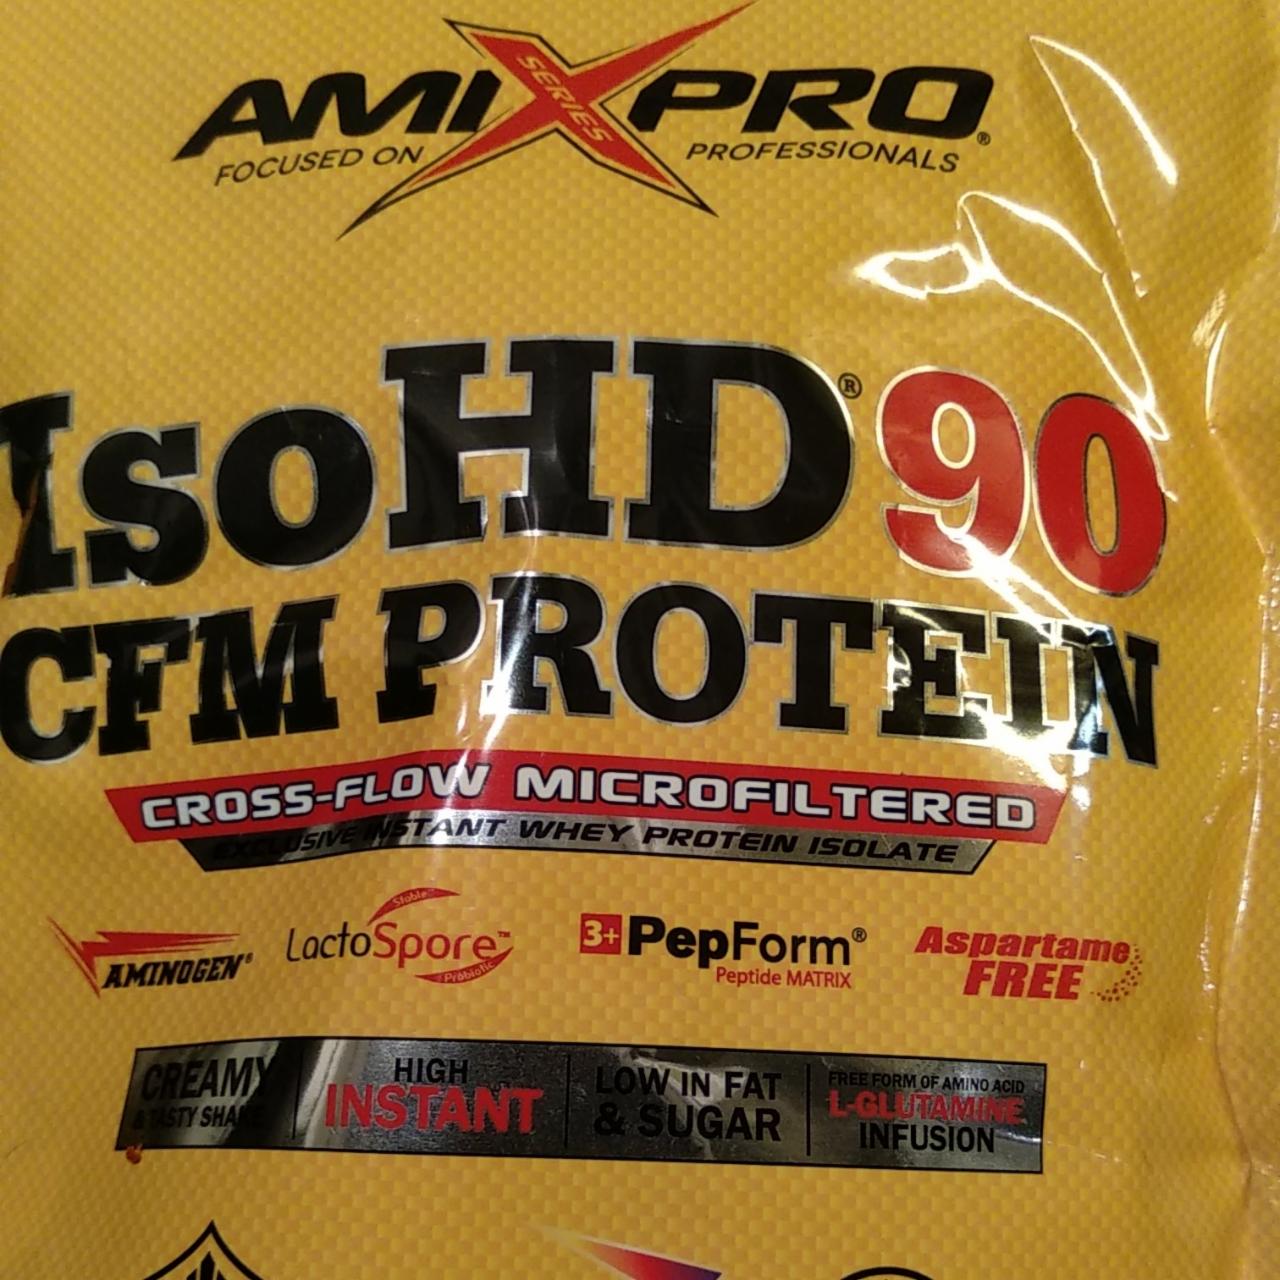 Zdjęcia - IsoHD 90 CFM Protein Amixpro